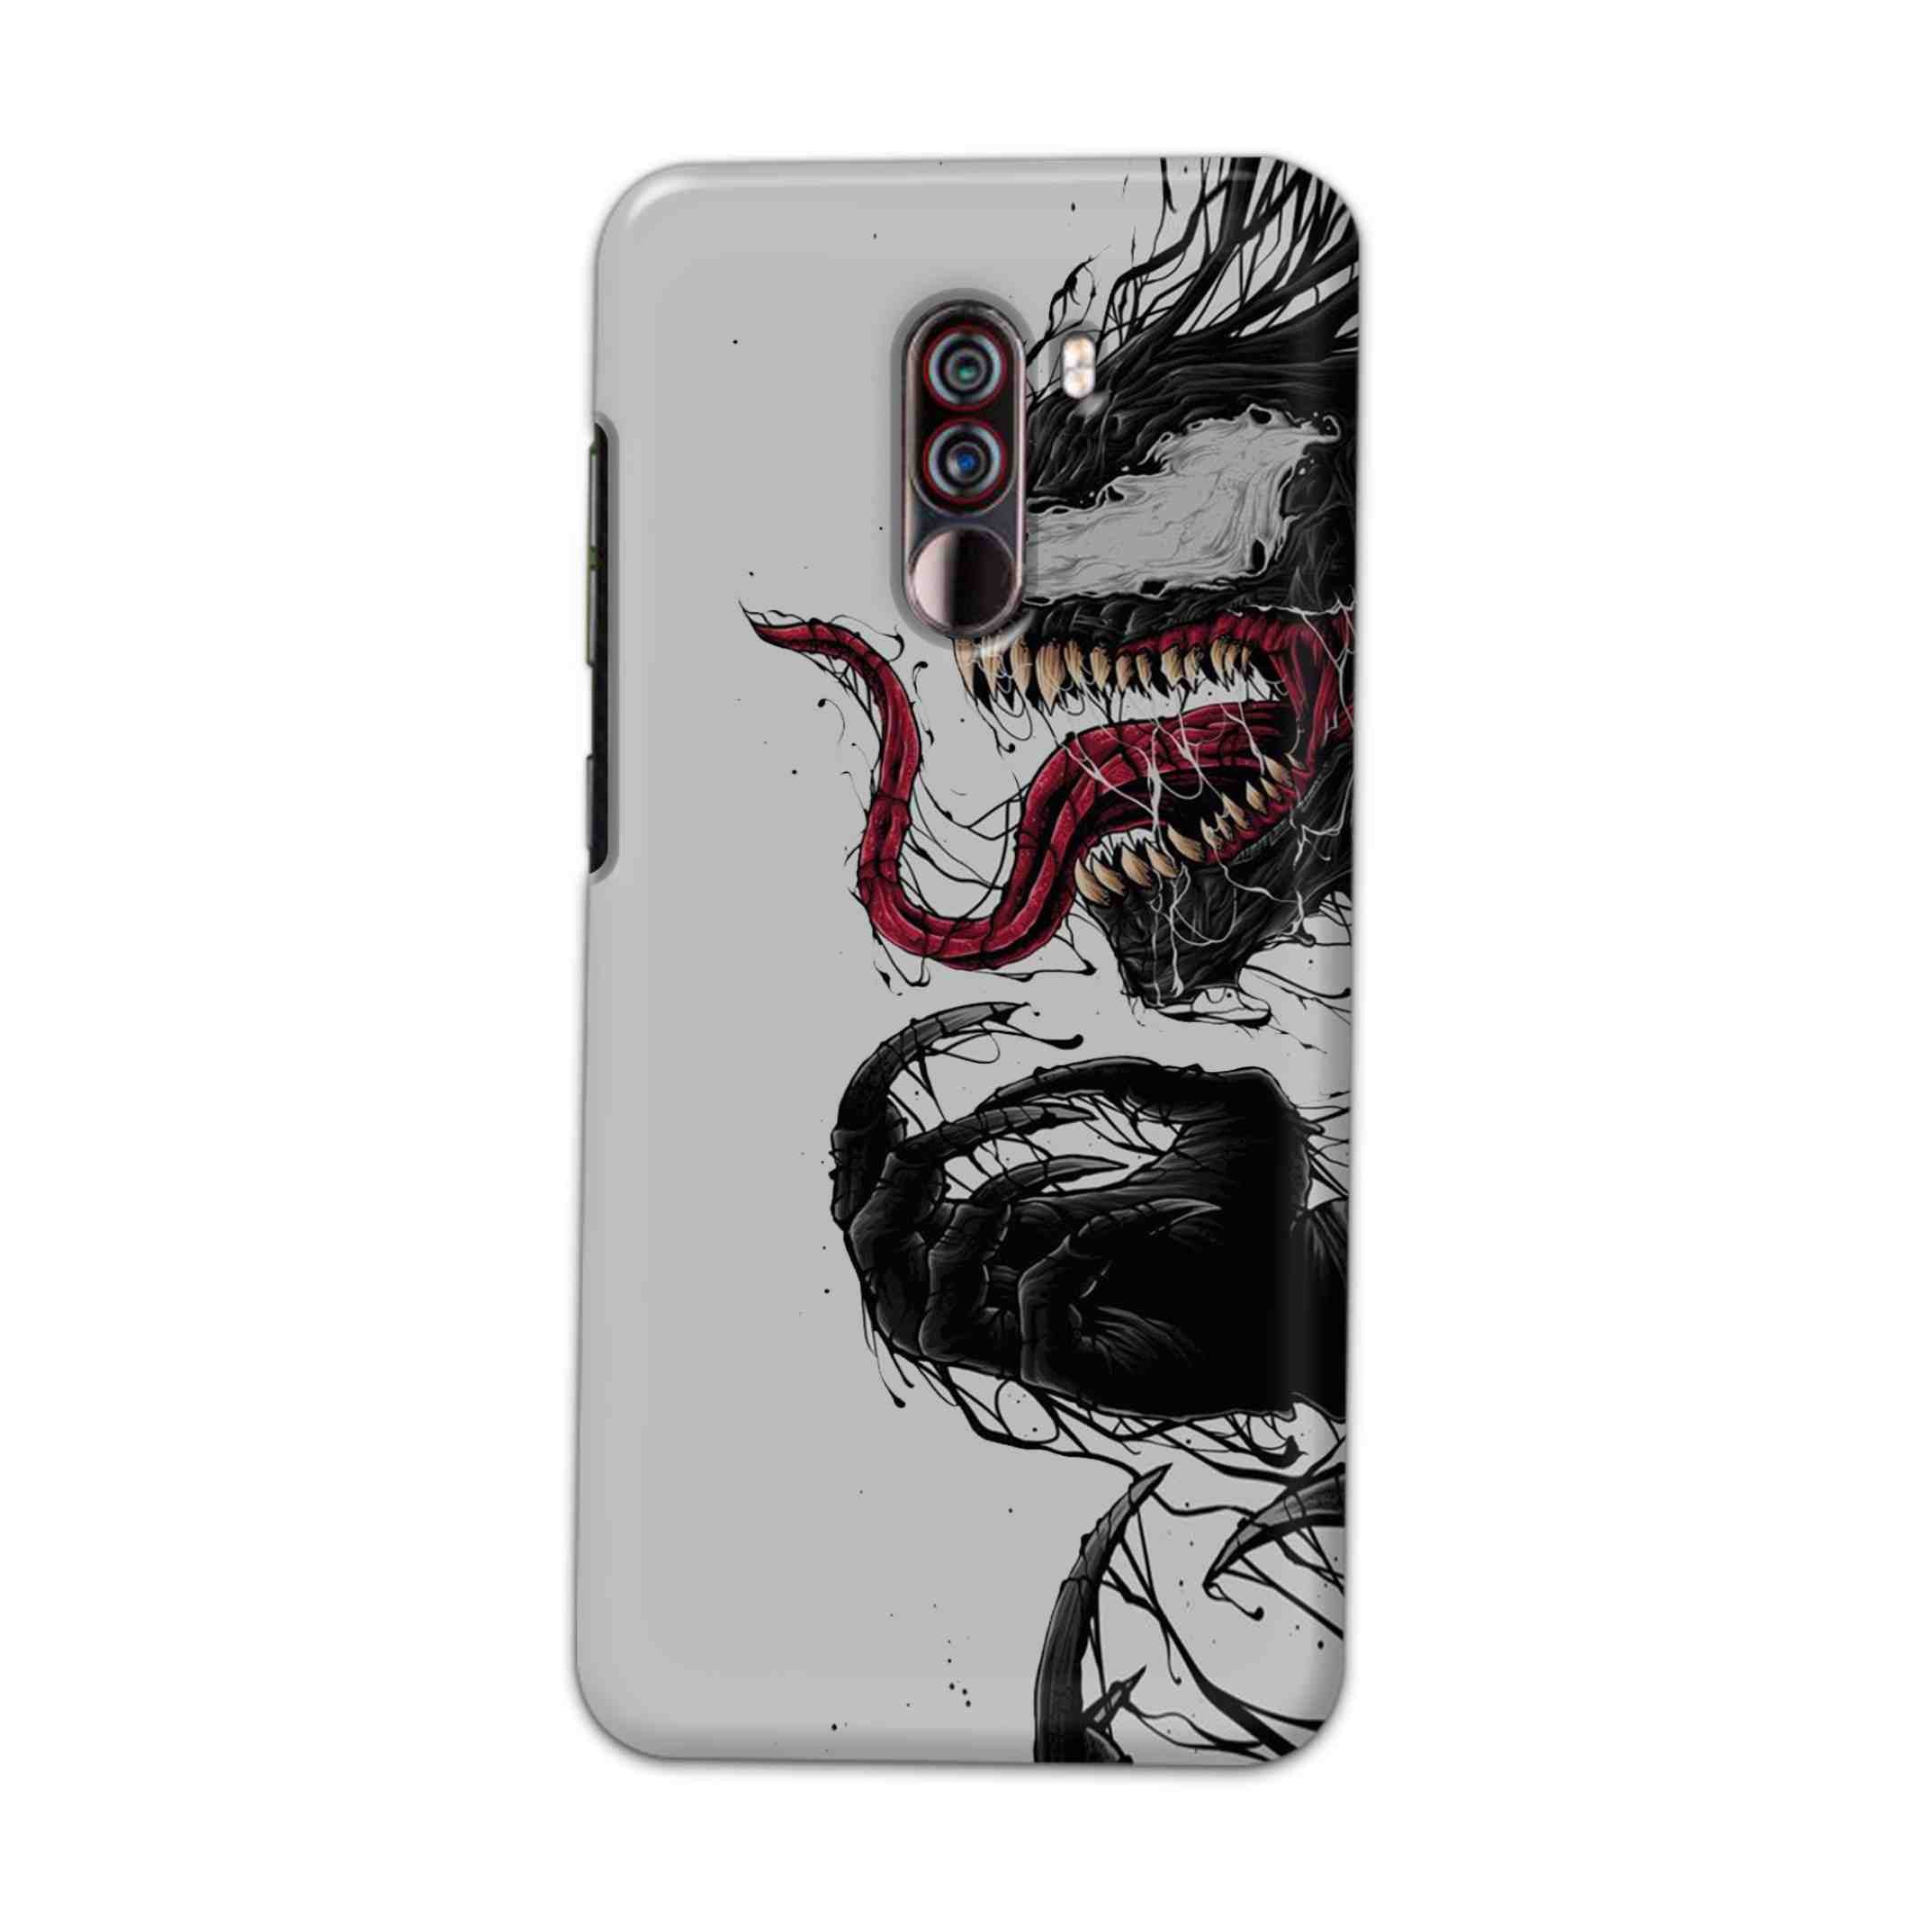 Buy Venom Crazy Hard Back Mobile Phone Case Cover For Xiaomi Pocophone F1 Online